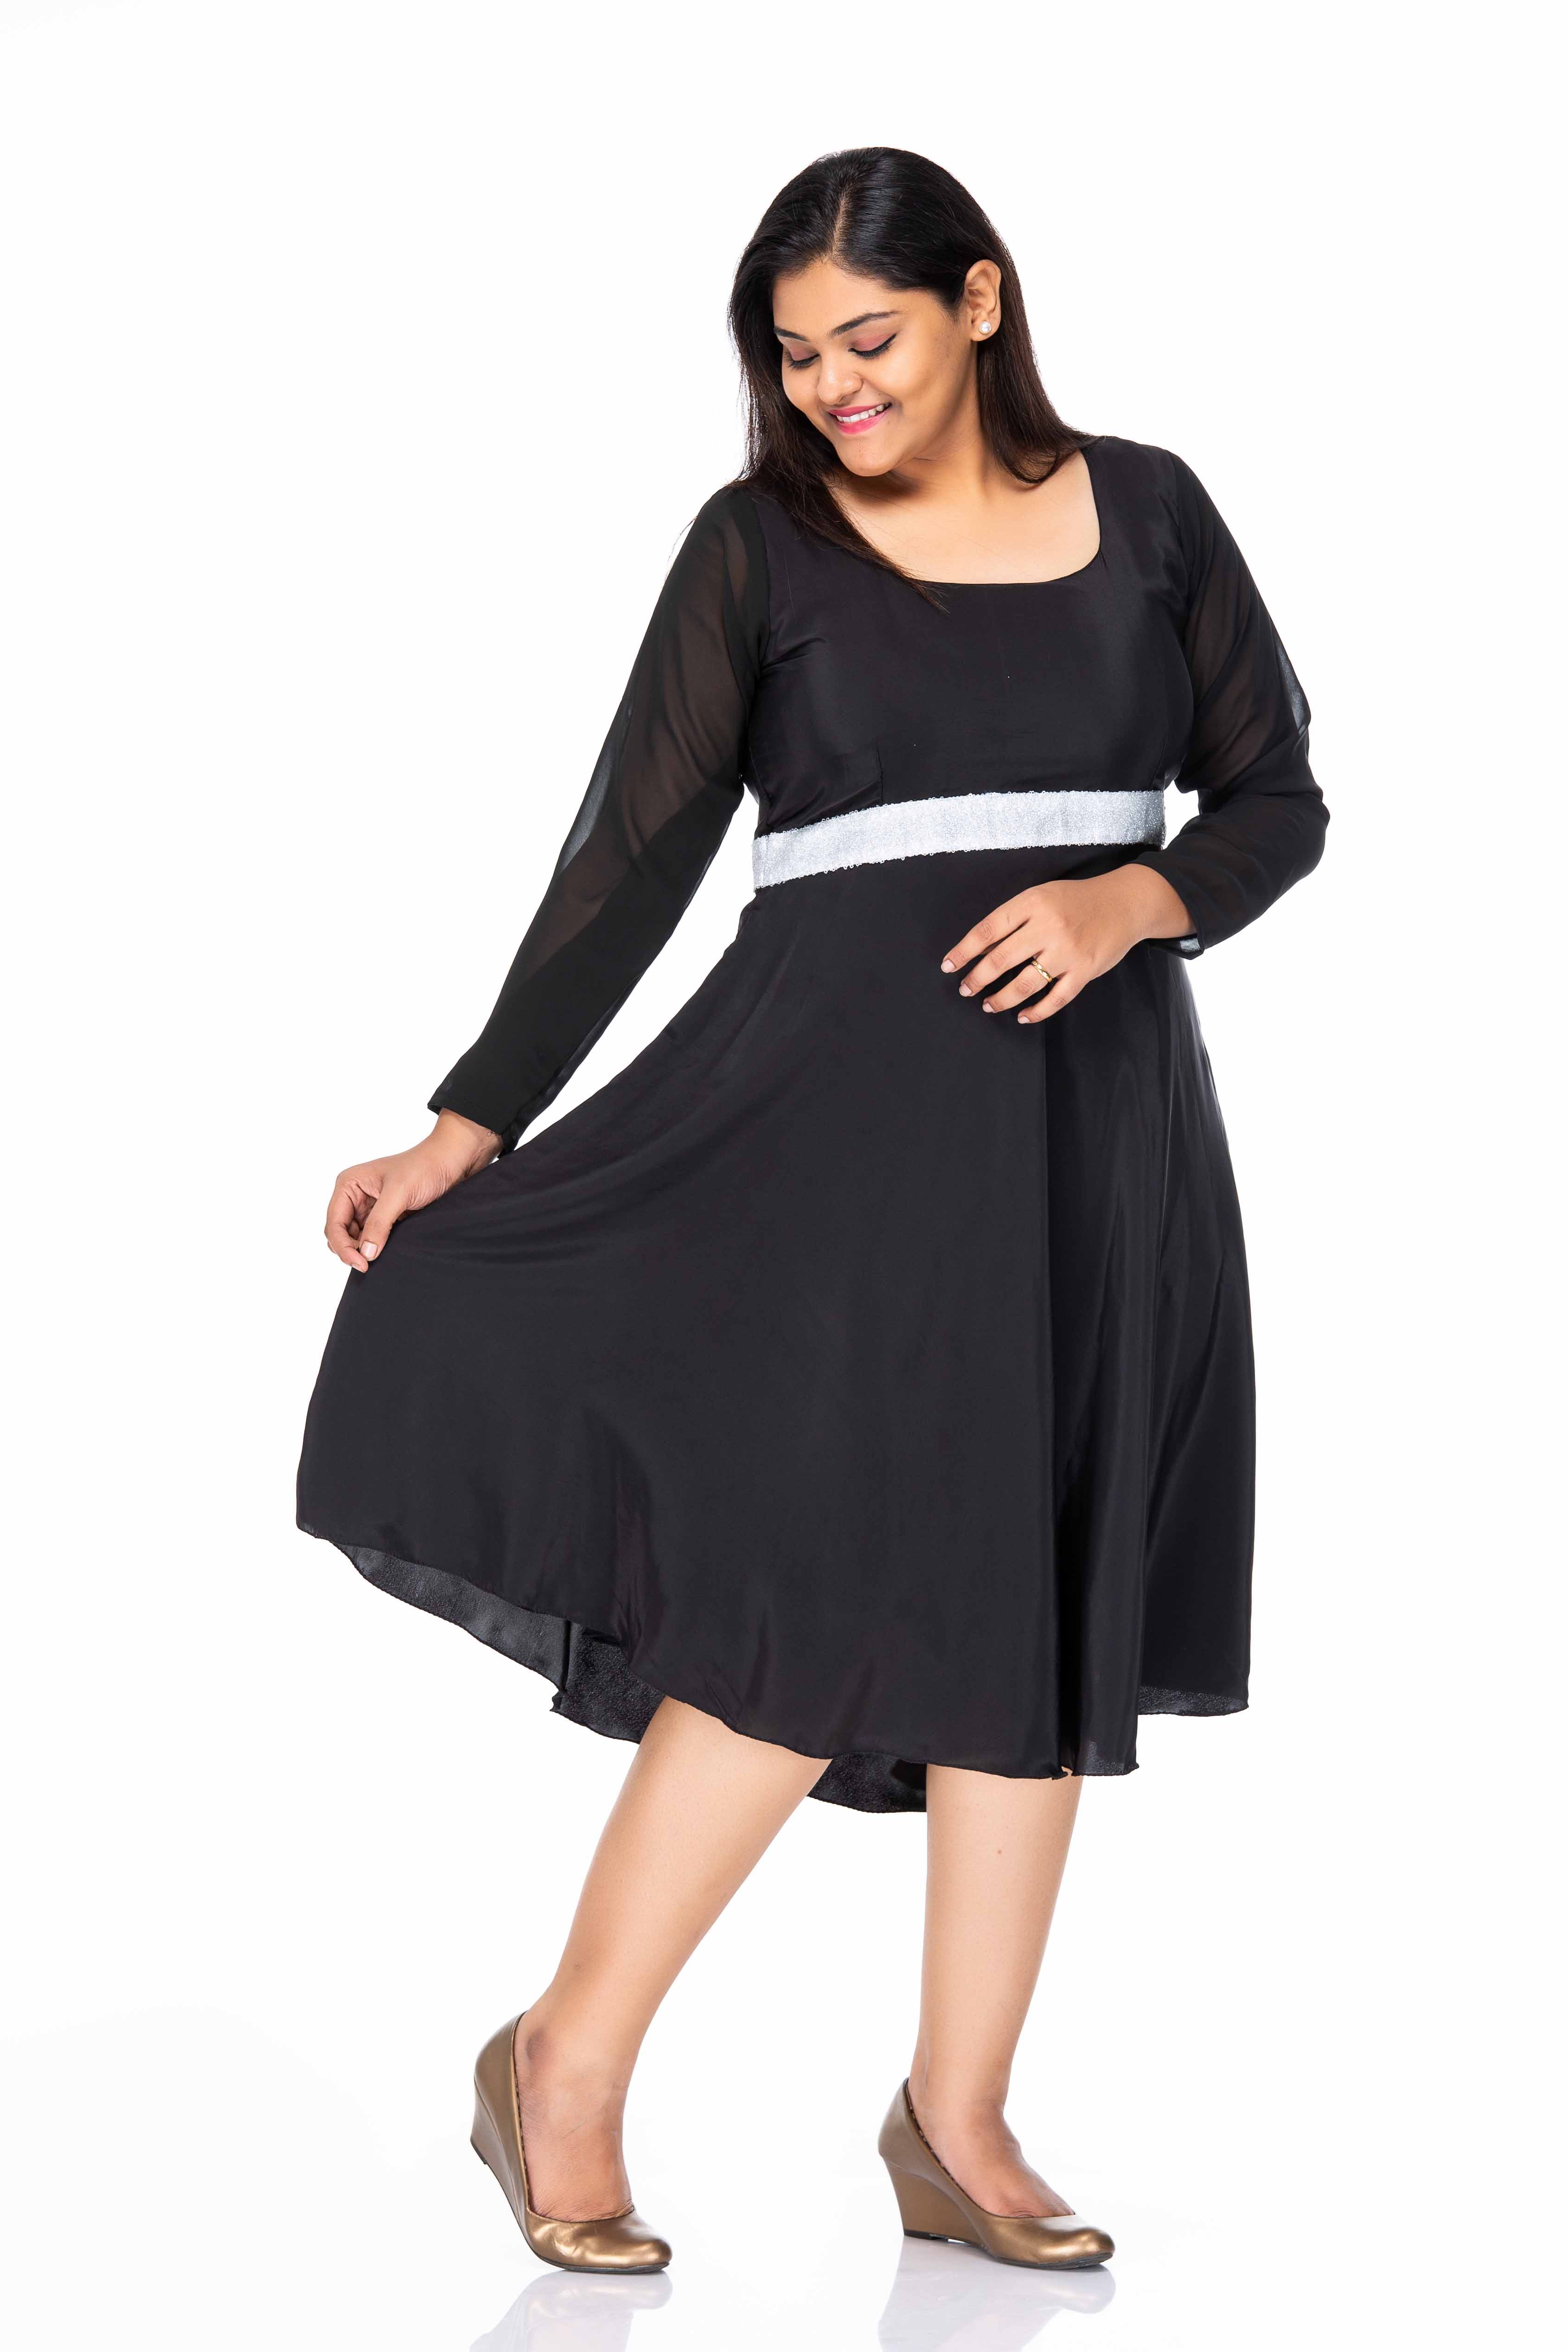 Women Black Party Wear Clothing  Buy Black Party Wear Dress For Girls  Online in India  FabAlley